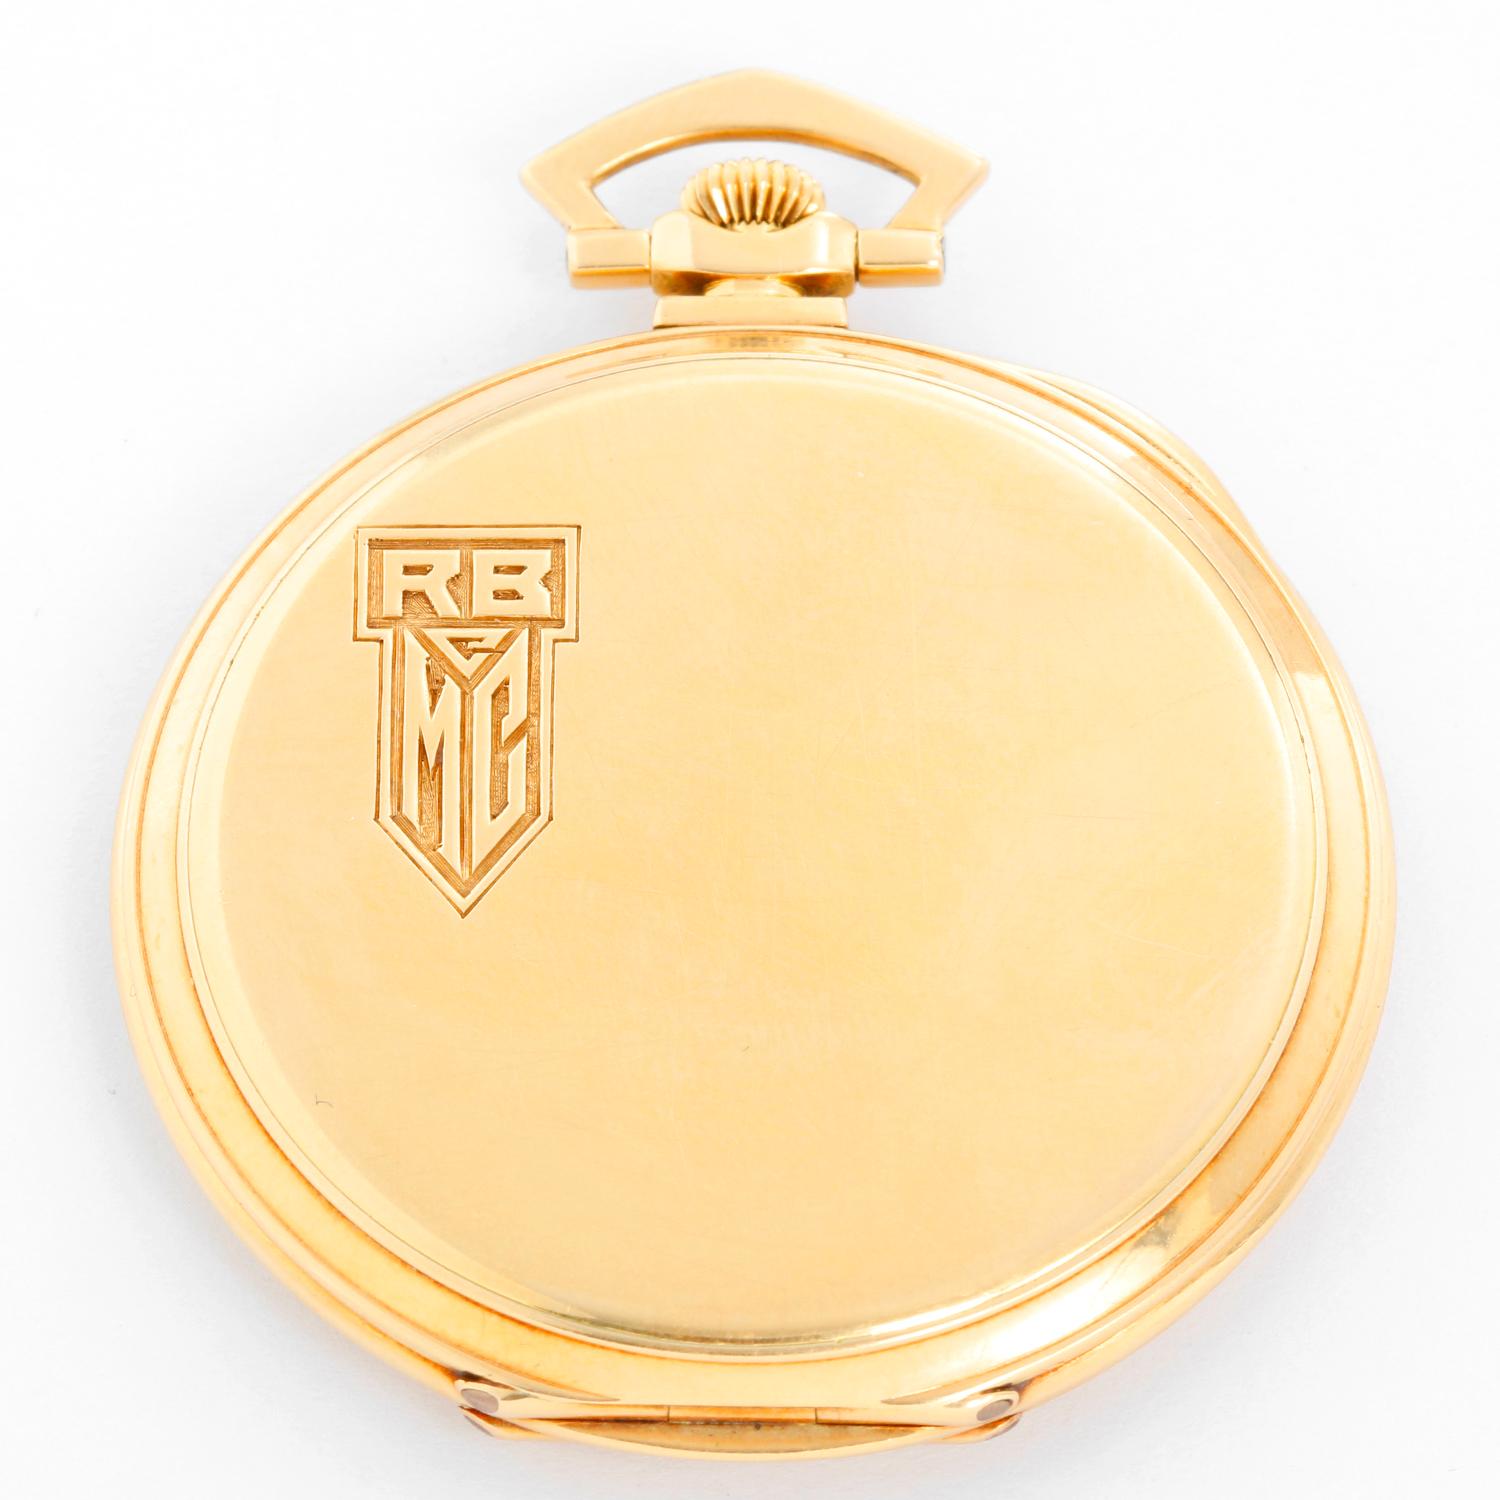 Patek Philippe & Co. 18K Gold Art Deco Open Face Pocket Watch - Manual movement. 18K Yellow Gold case ( 44 mm ) Inside case back engraving 